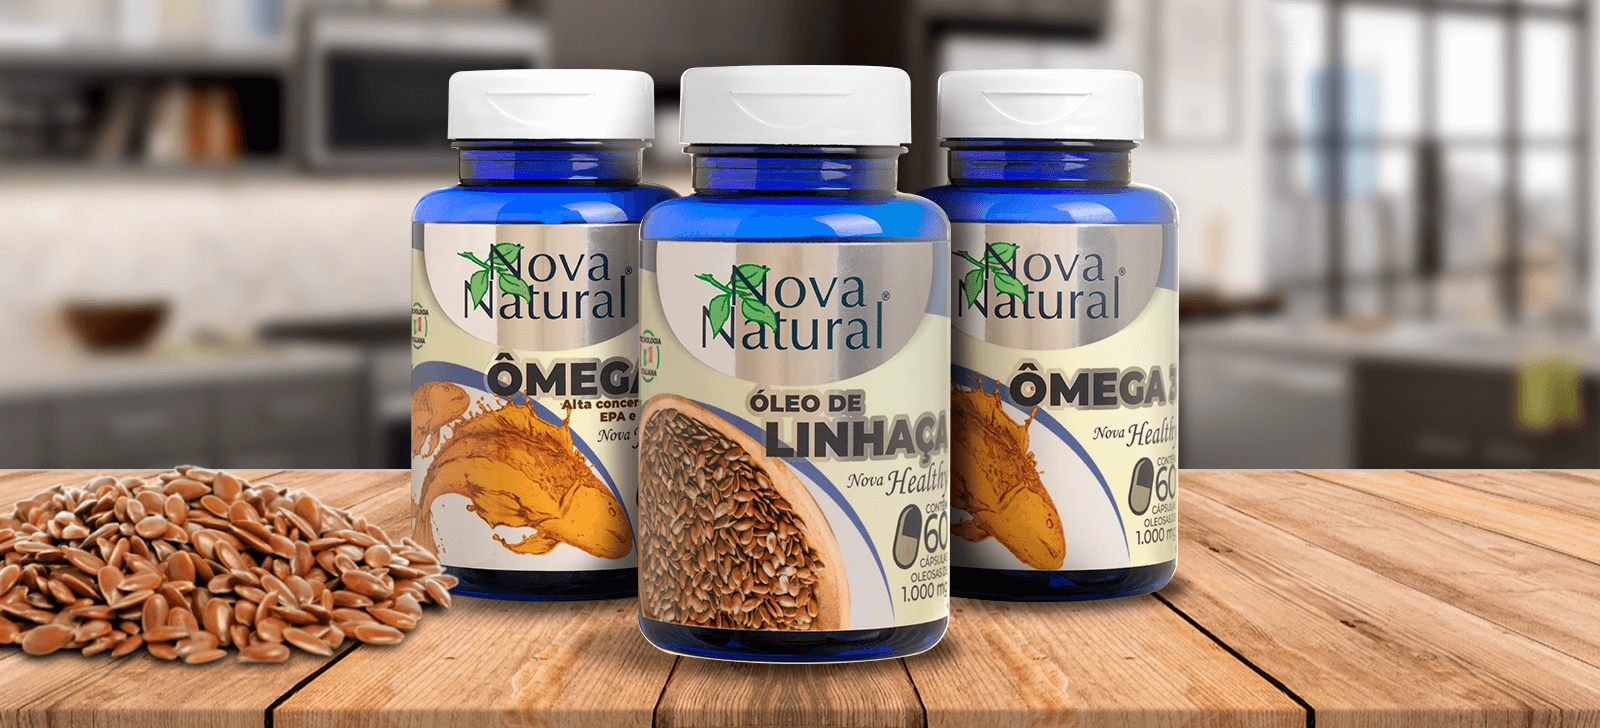 farmacia manipulacao campinas nova natural blog natureza magistral suplementos omega 3 nova natural